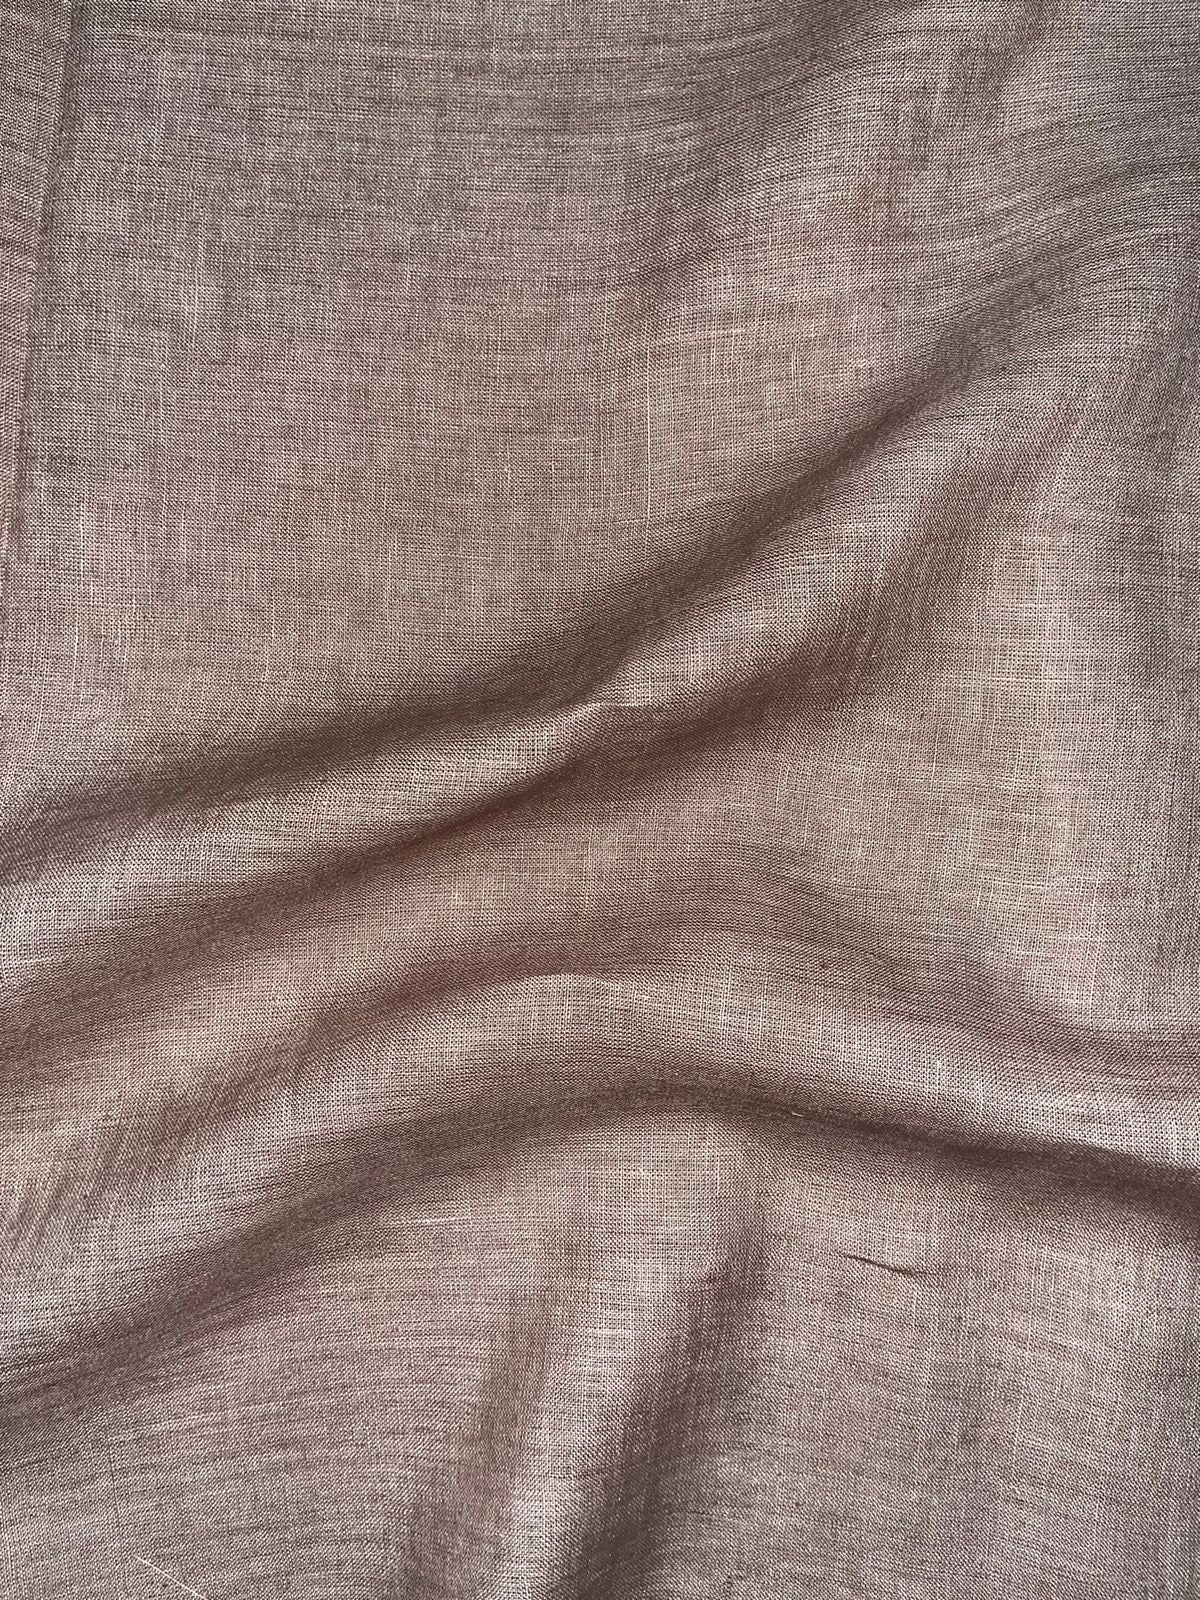 40 lea 58 inch 100% pure Handloom Linen Fabric -Walnut Beige Shade